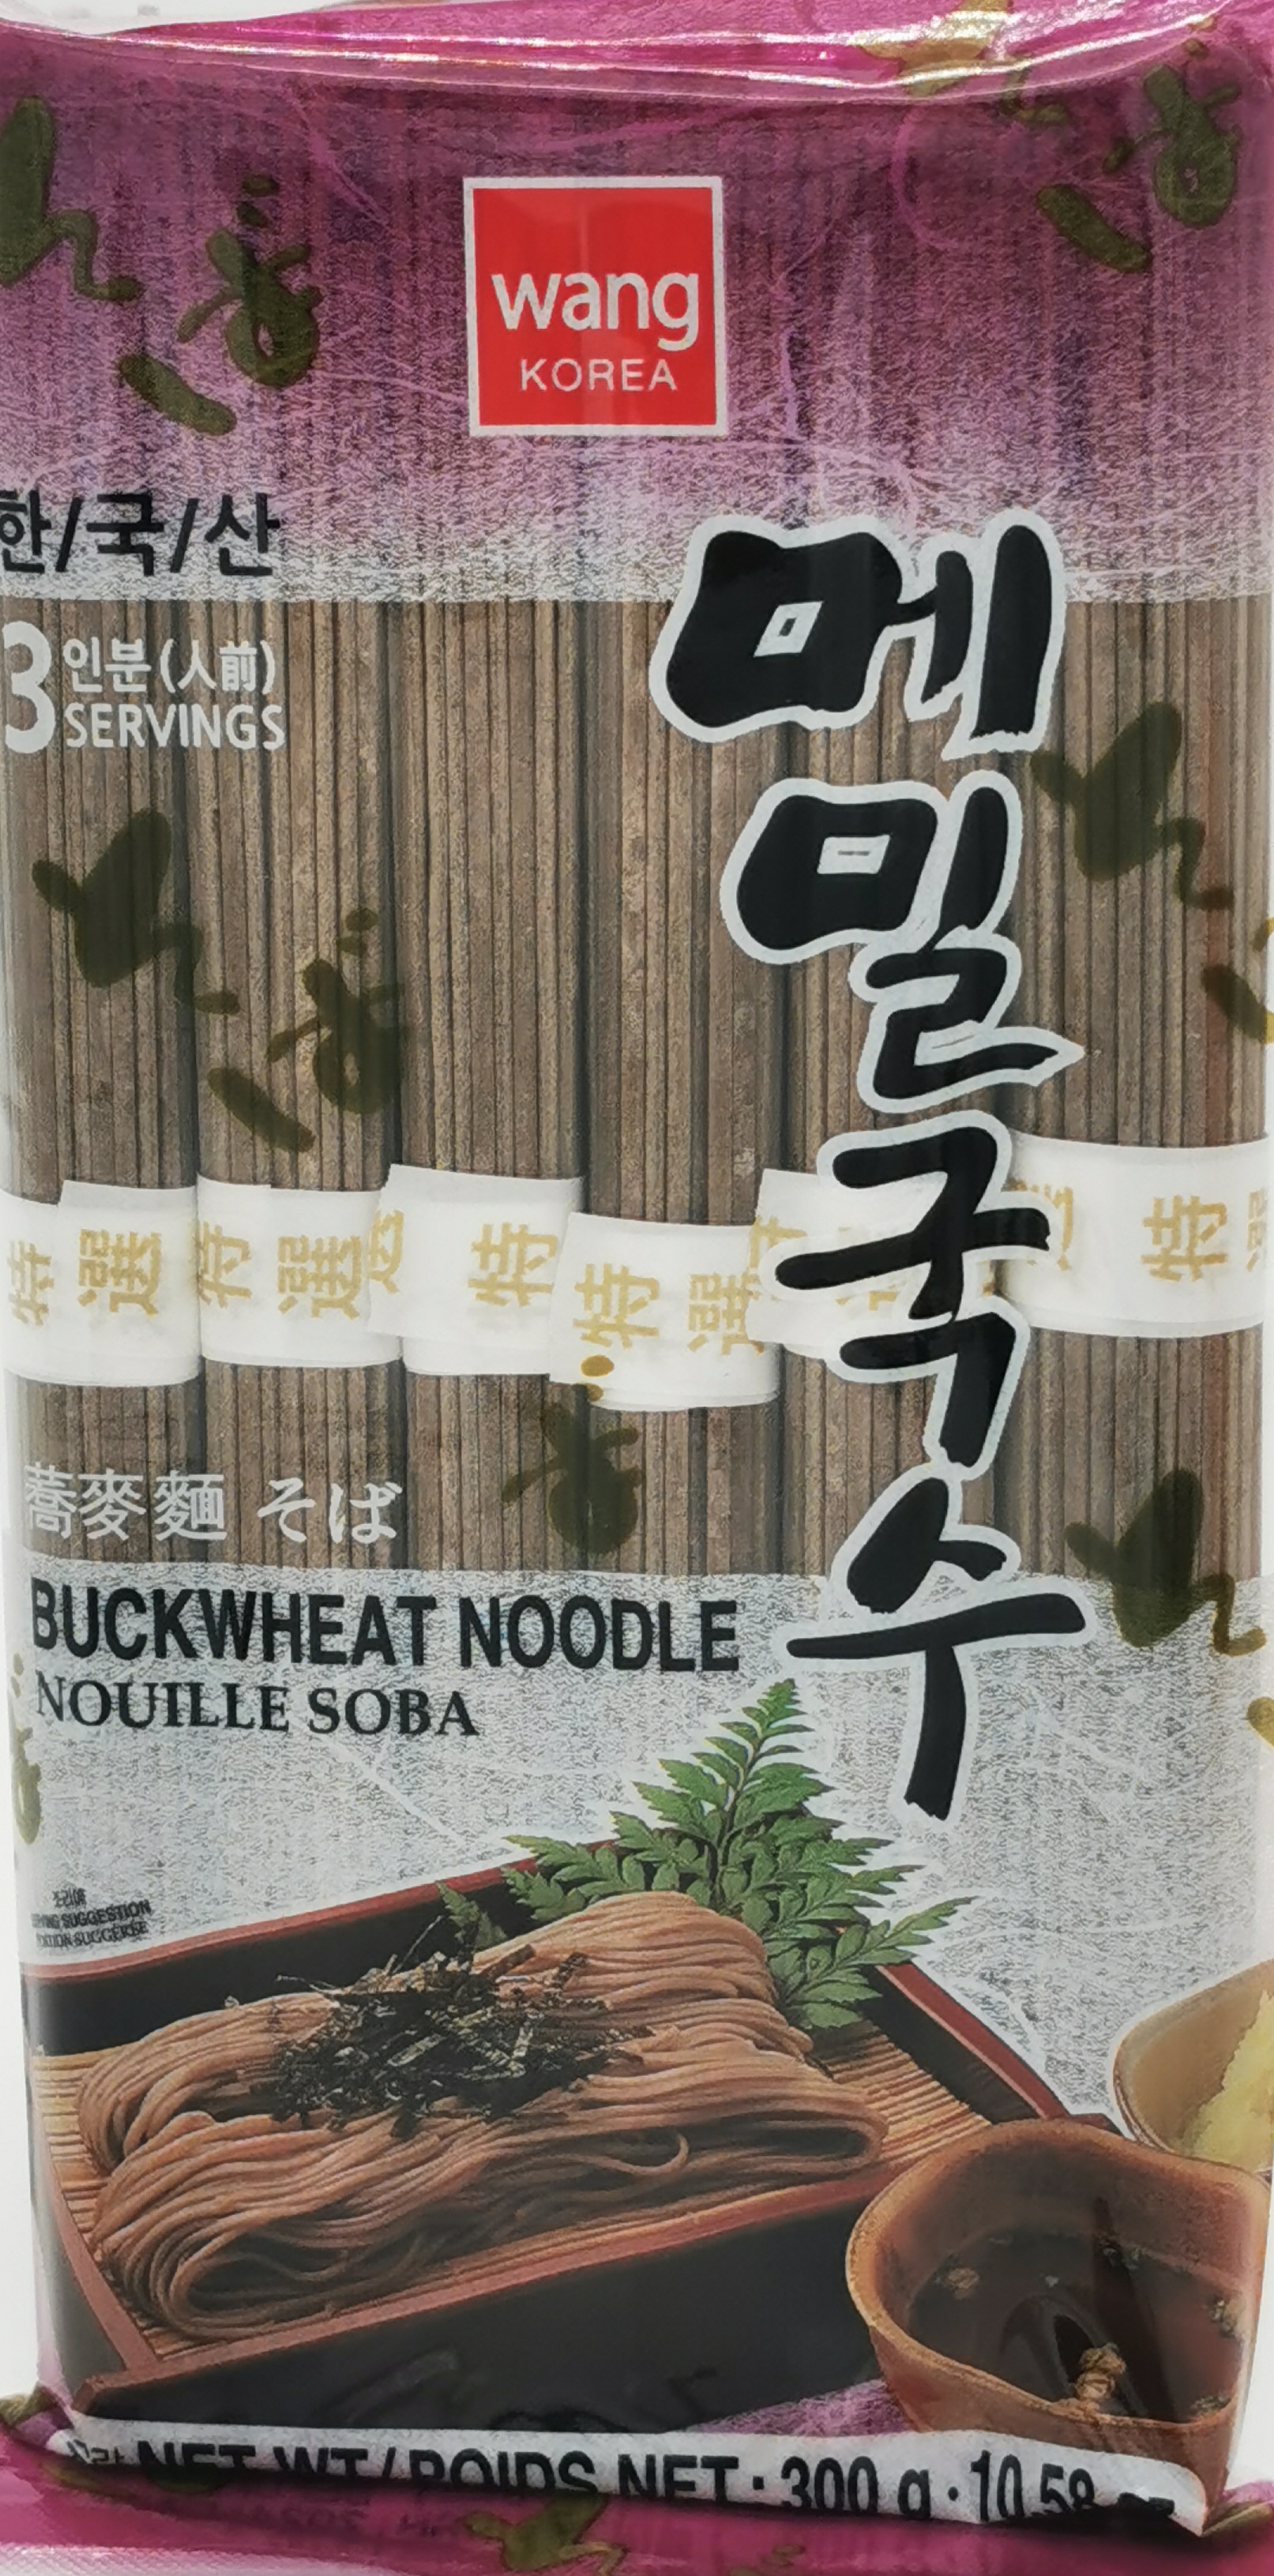 WANG KOREA BUCKWHEAT NOODLE 300g